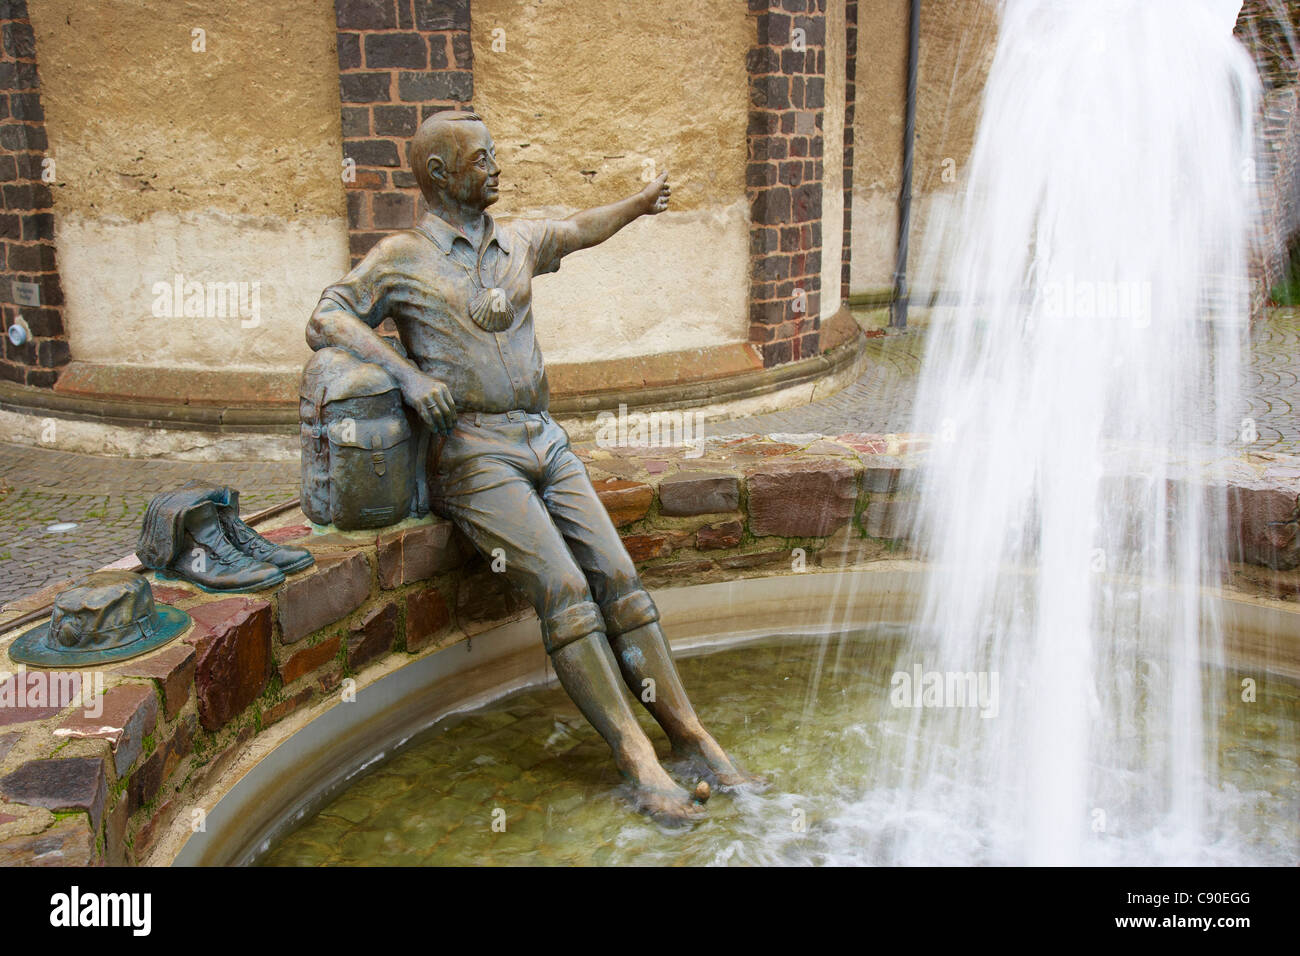 Fountain with sculpture of a pilgrim on the way to Santiago, Kaisersesch, Eifel, Rhineland-Palatinate, Germany, Europe Stock Photo